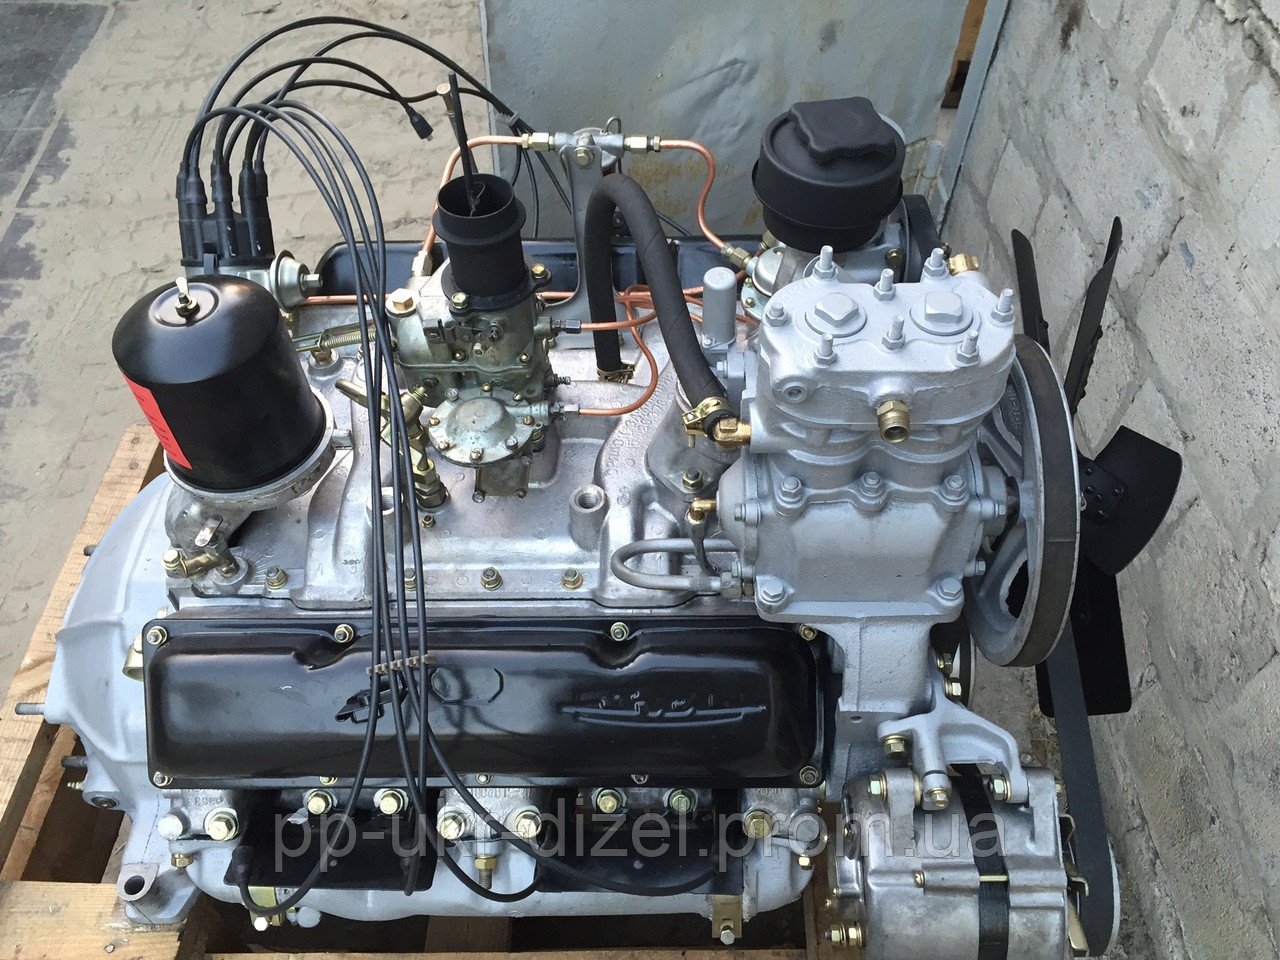 Мотор зил 131. Двигатель ЗИЛ 131 130. Мотор ЗИЛ 130 бензиновый. ЗИЛ 130 С 6 цилиндровым двигателем. Двигатель ЗИЛ-130-508.1000400-64.